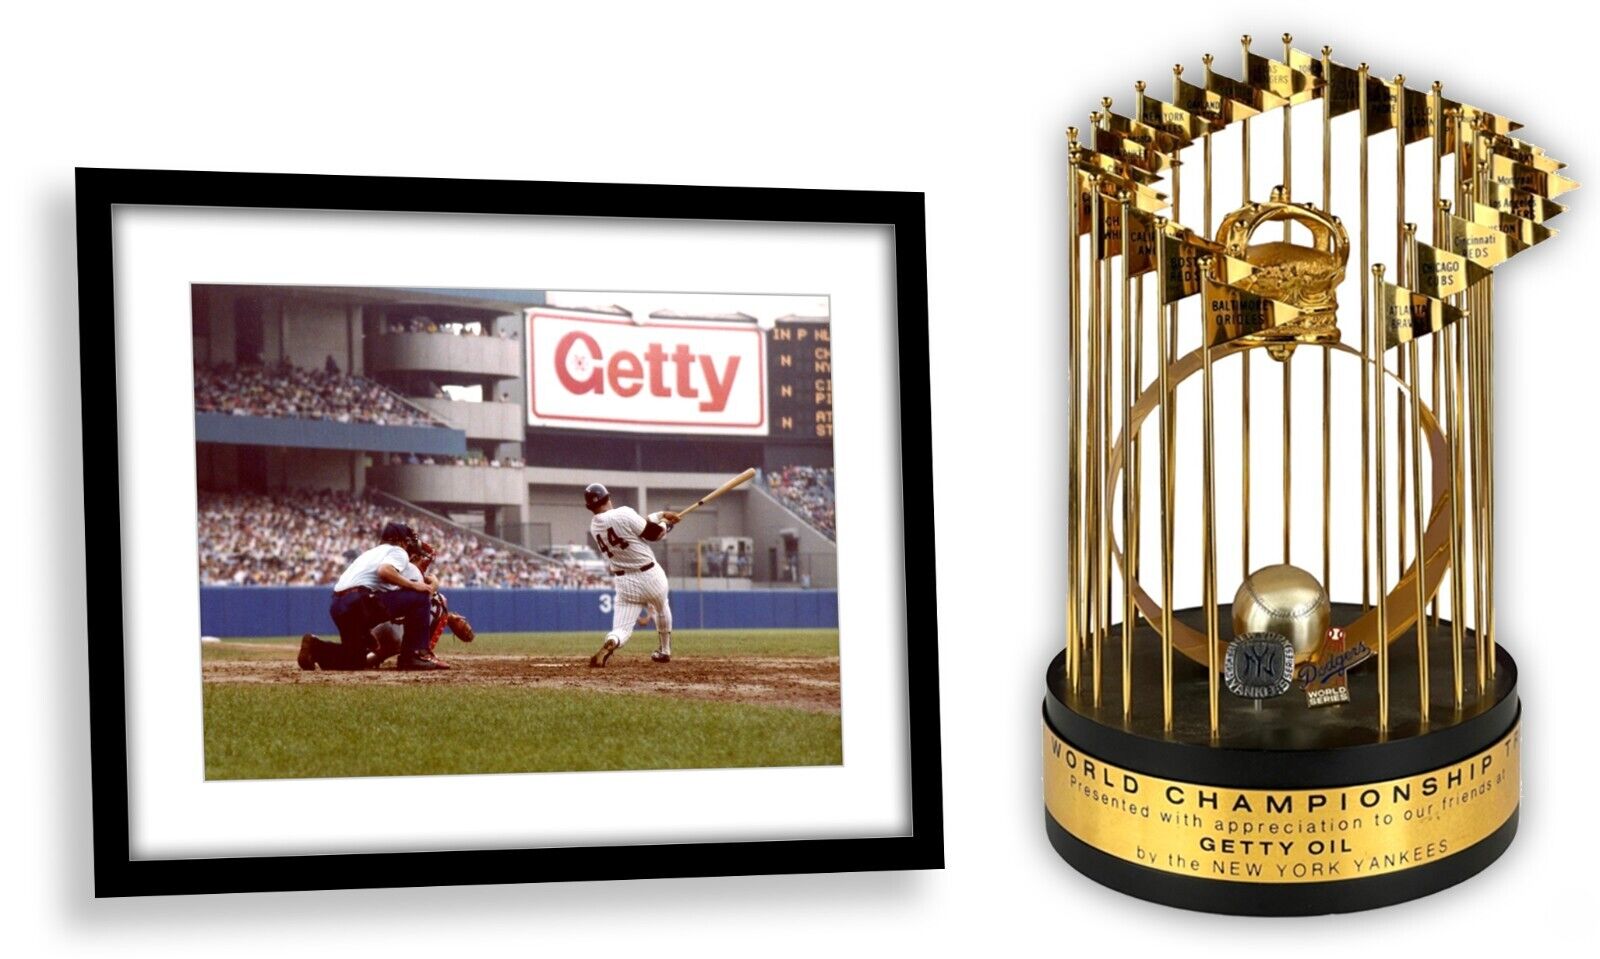 Original 1977 New York Yankees World Series Championship Trophy, 12 inch Balfour